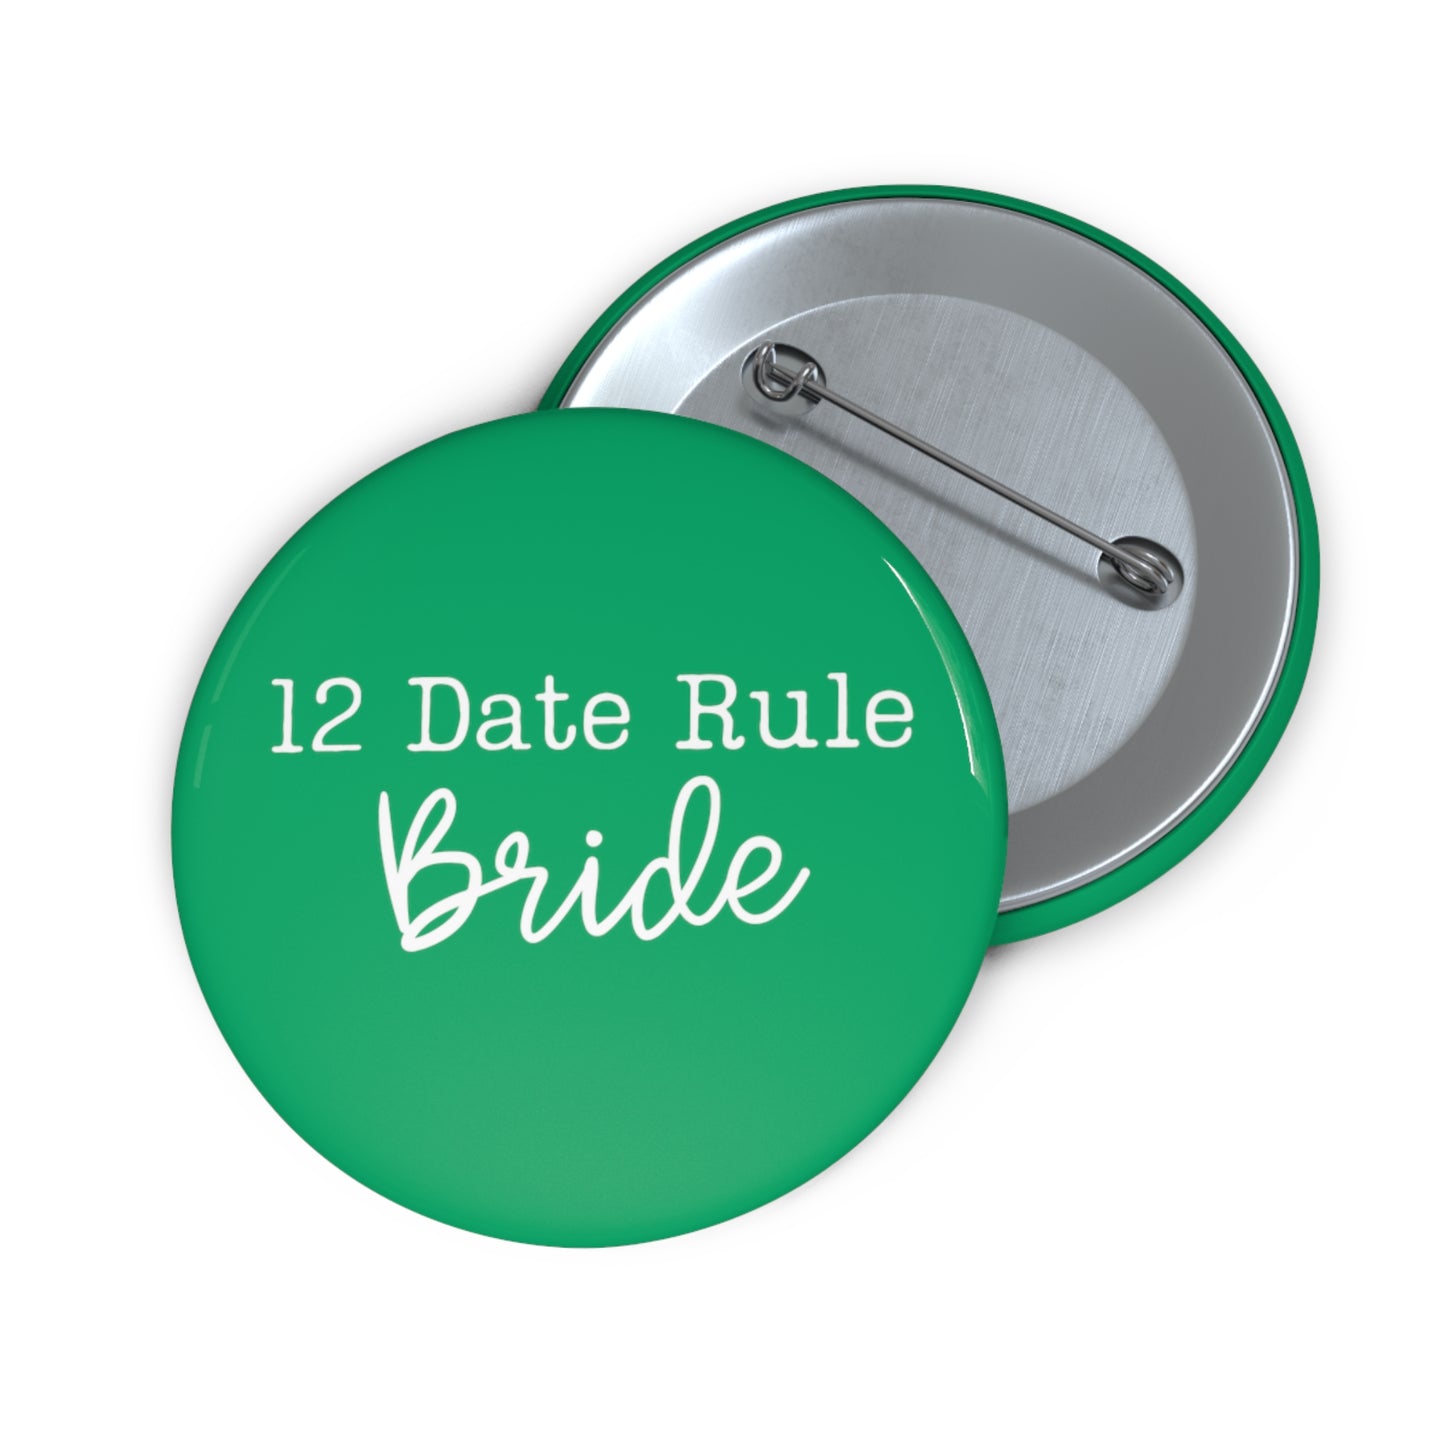 12 Date Rule Bride Pin (Green/White Combo)